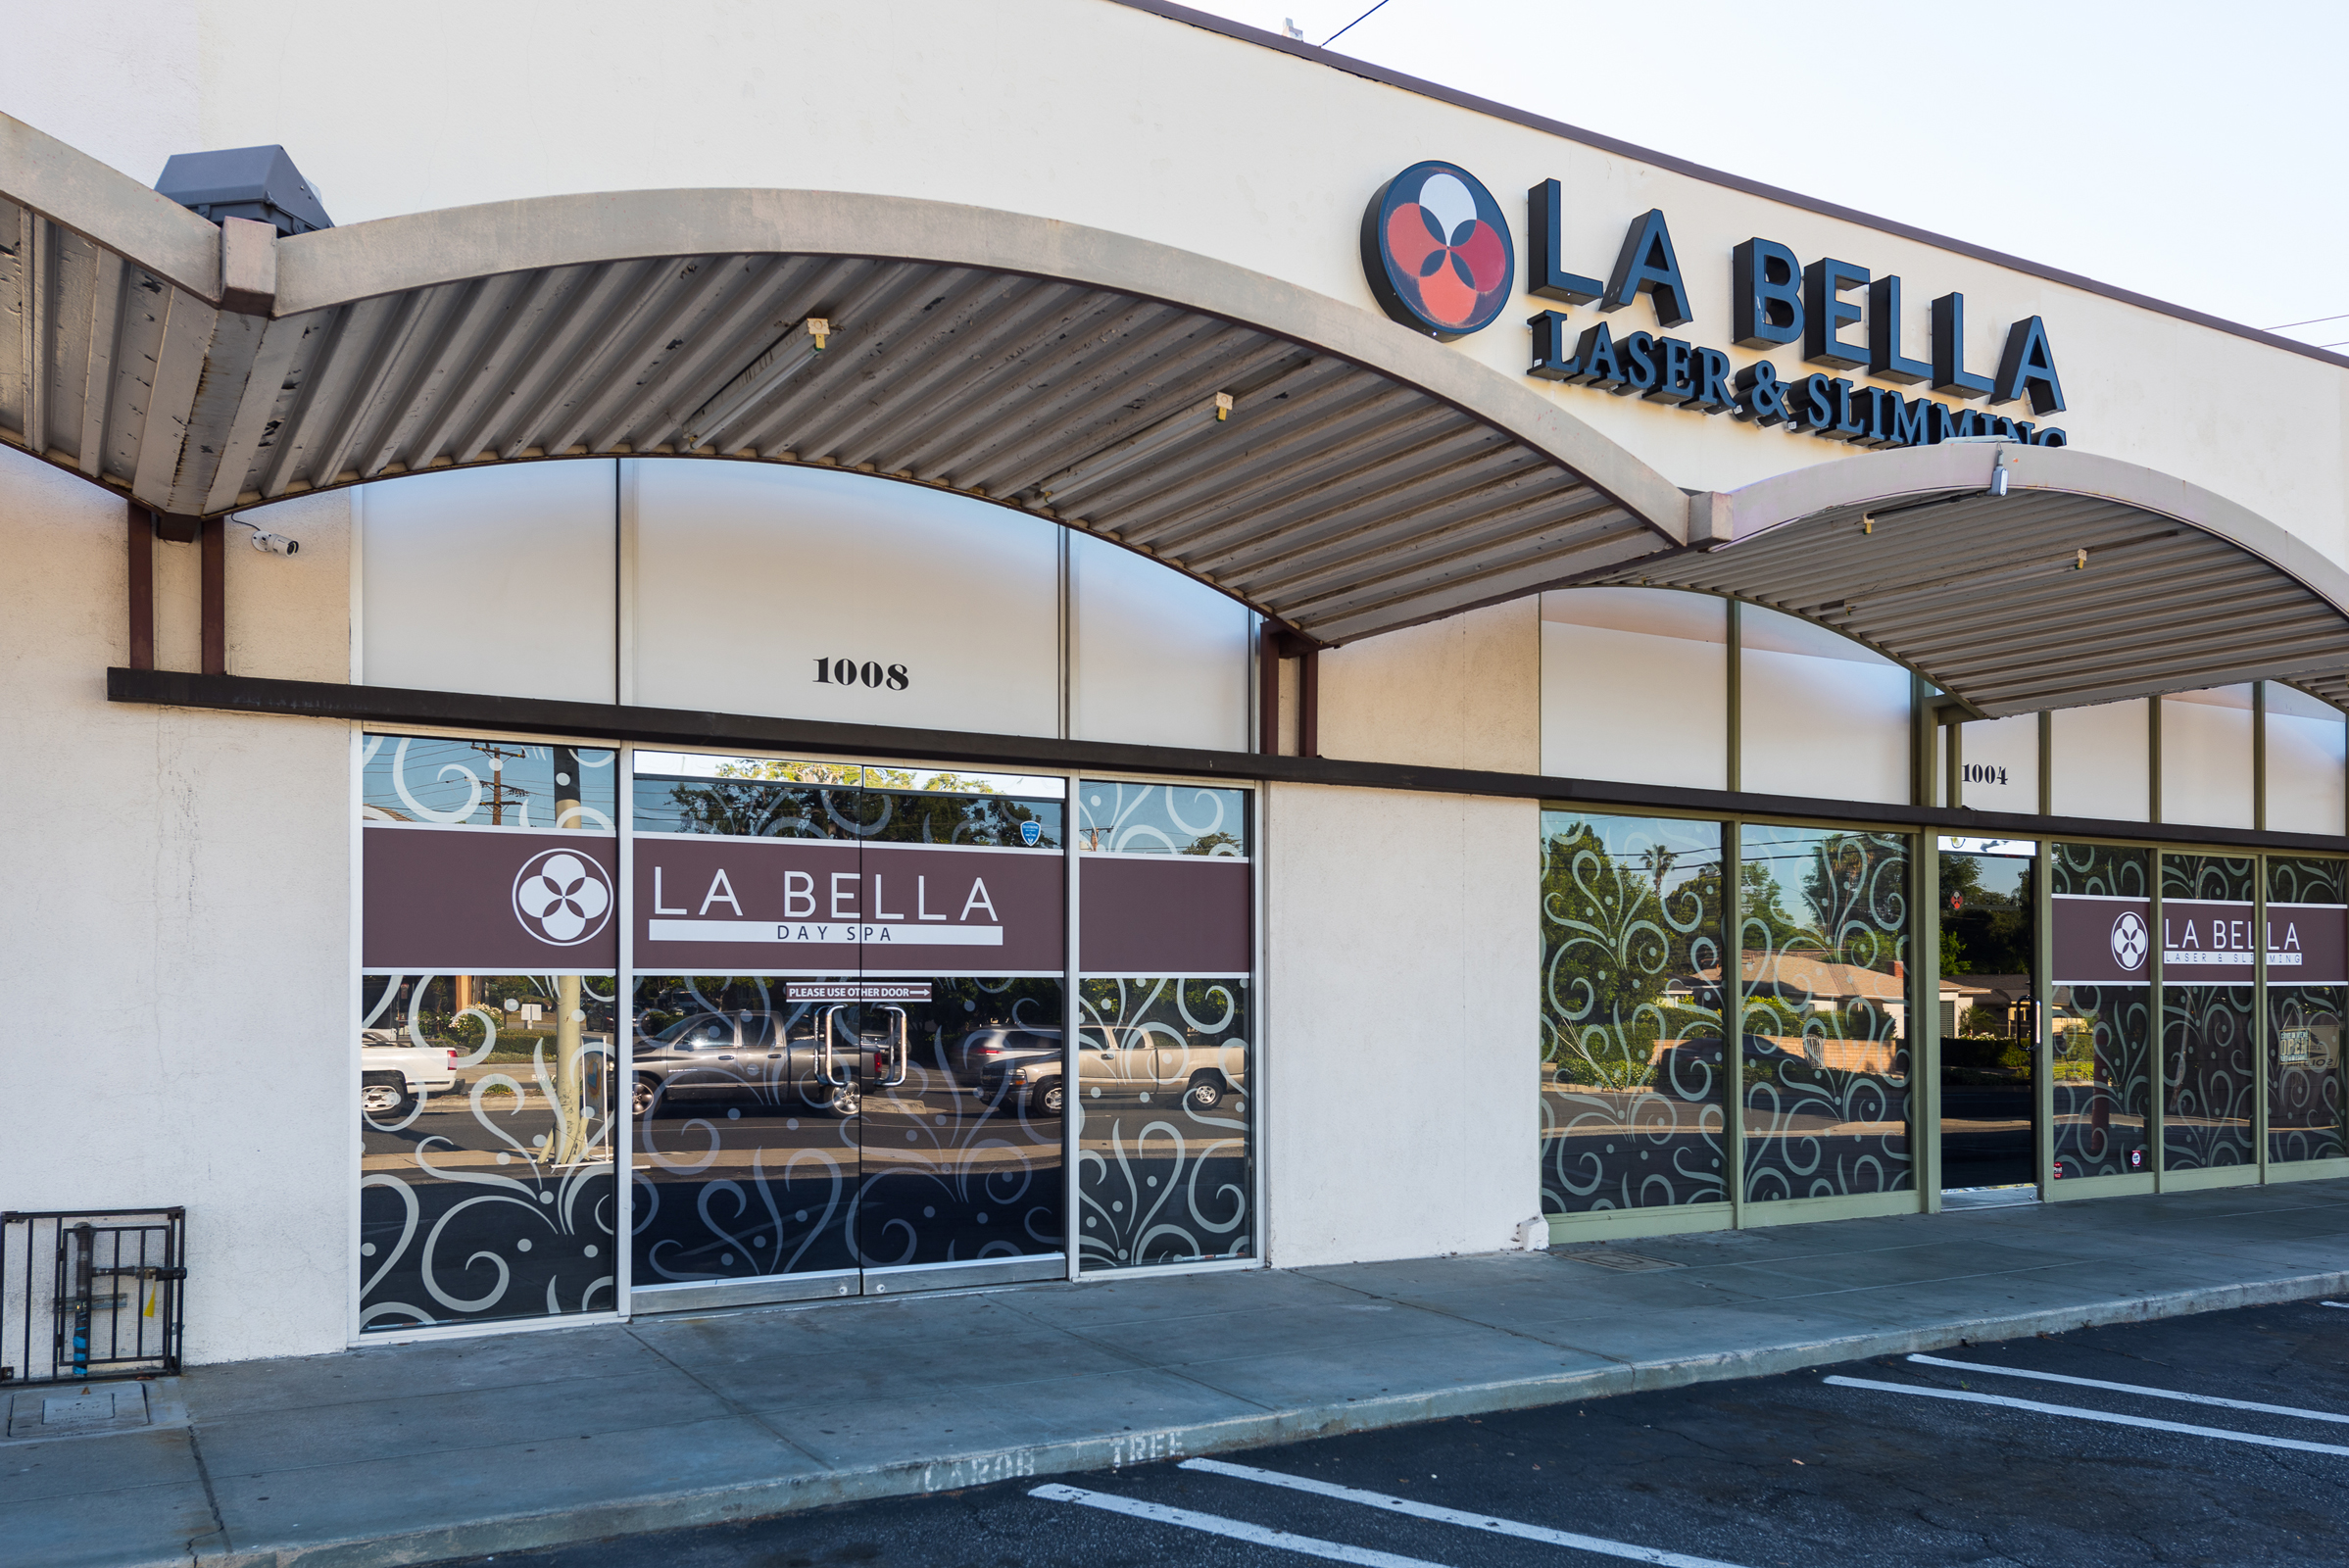 La Bella Laser & Slimming Office